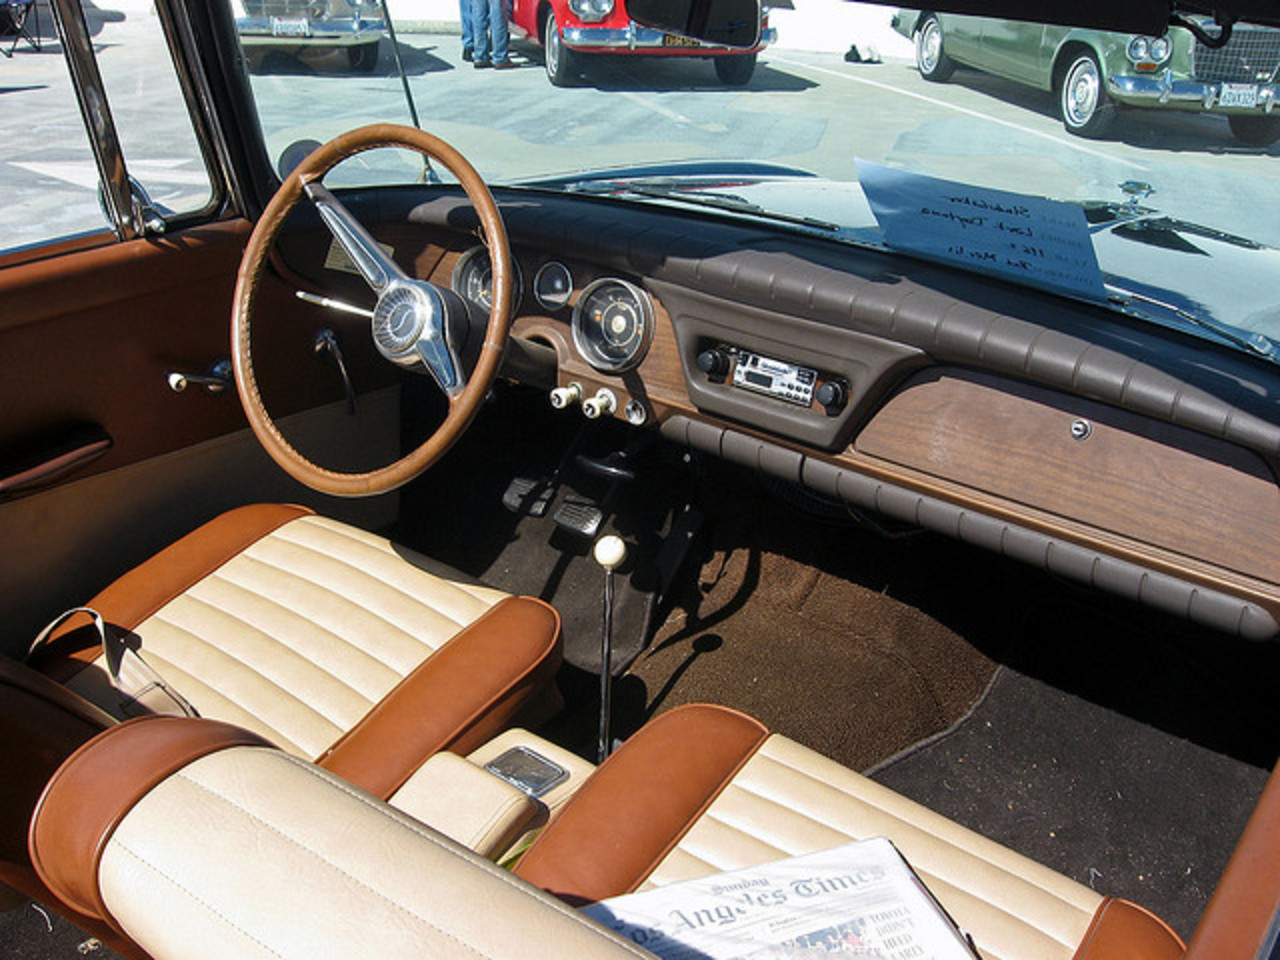 1962 Studebaker Lark Daytona convertible interior | Flickr - Photo ...